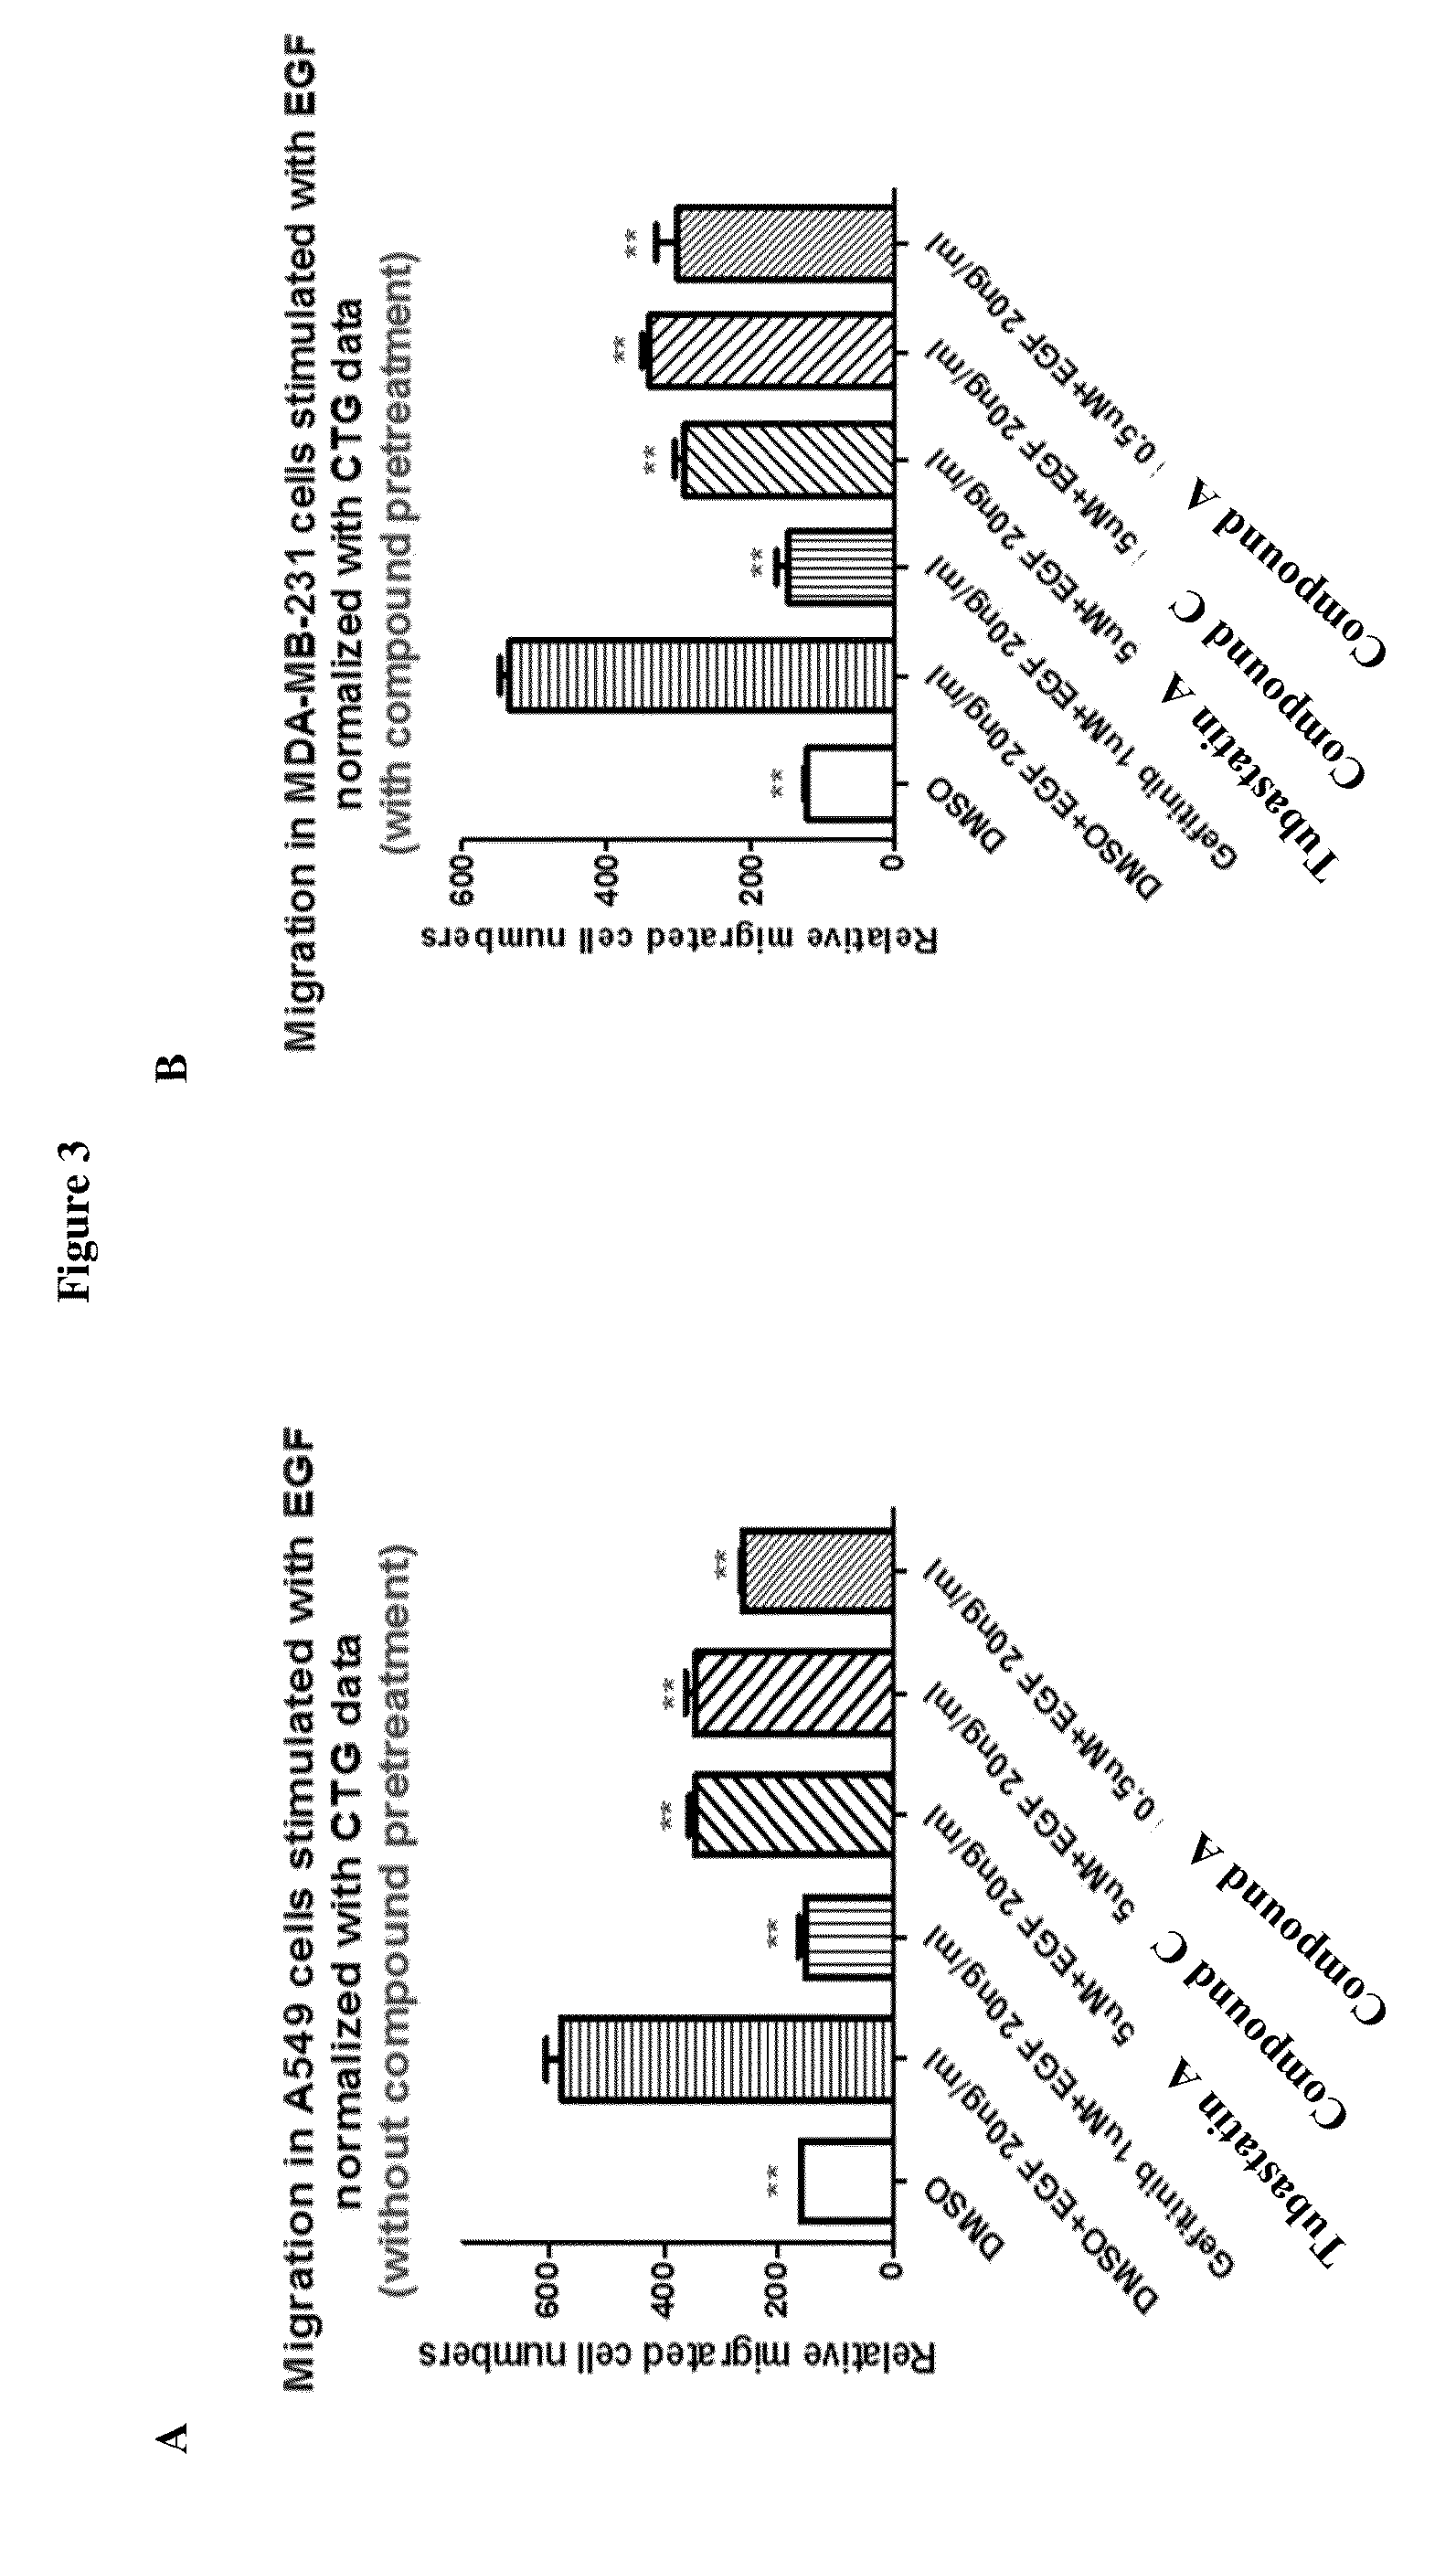 Combinations of histone deacetylase inhibitors and either her2 inhibitors or pi3k inhibitors